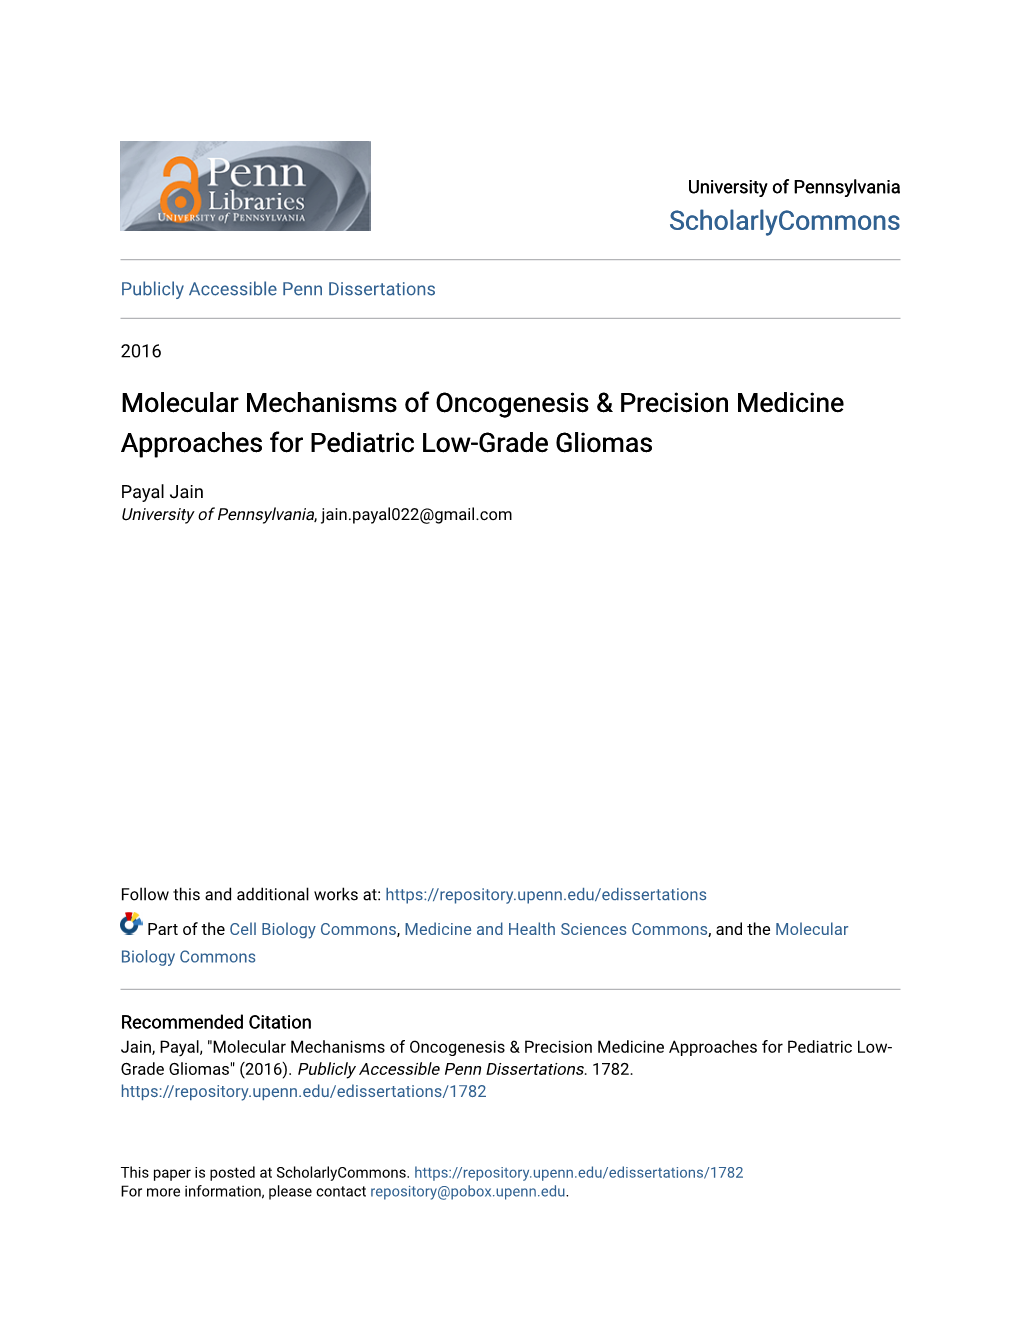 Molecular Mechanisms of Oncogenesis & Precision Medicine